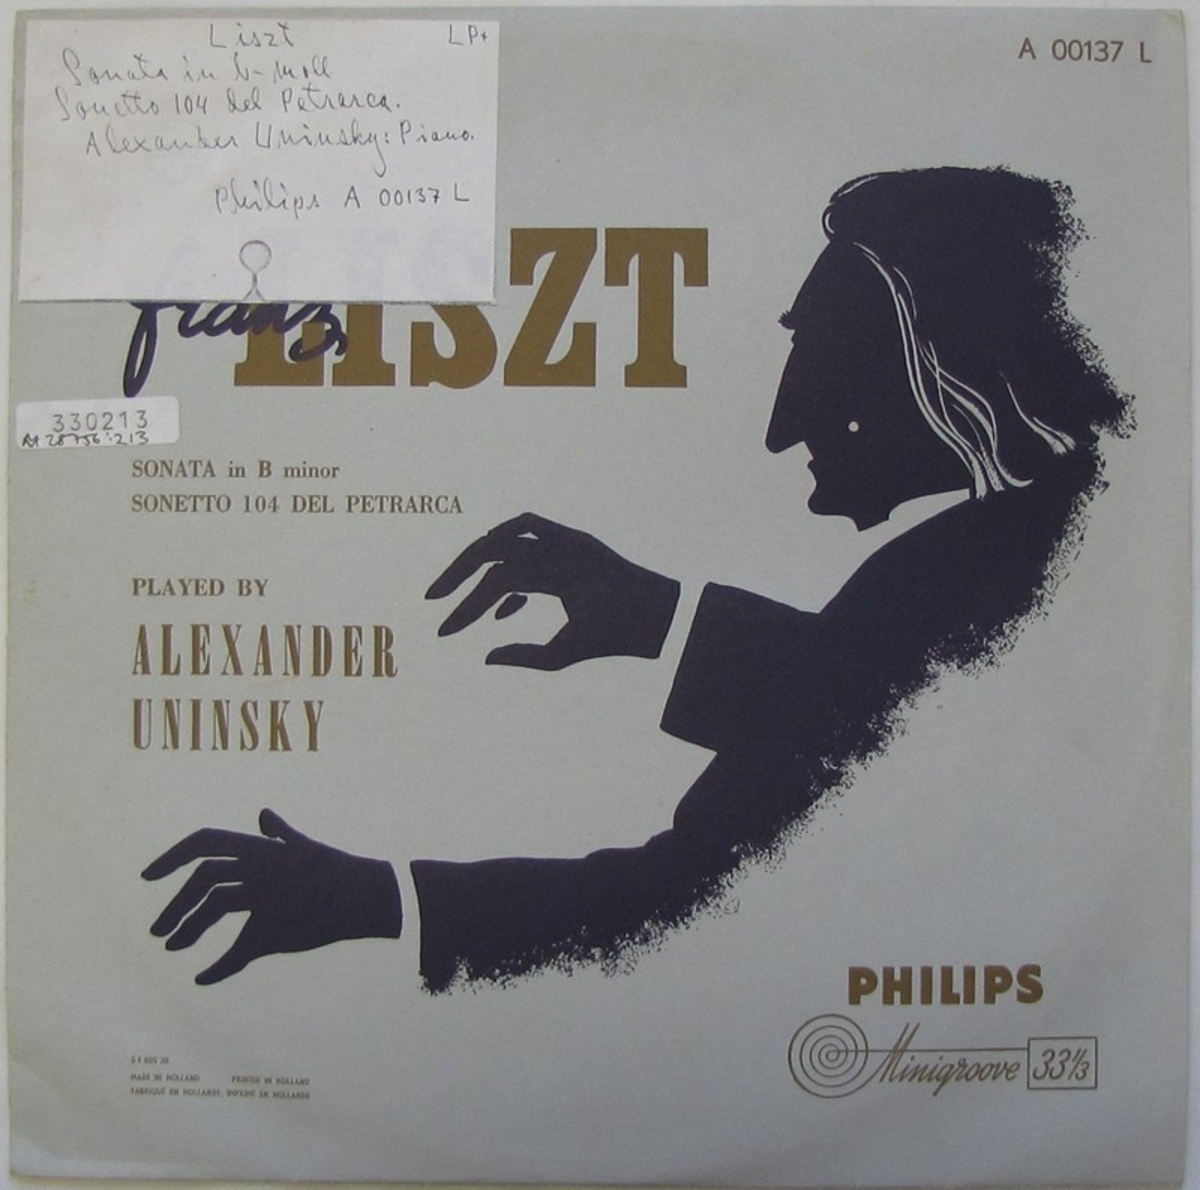 LP-skiva av märket Philips Minigroove